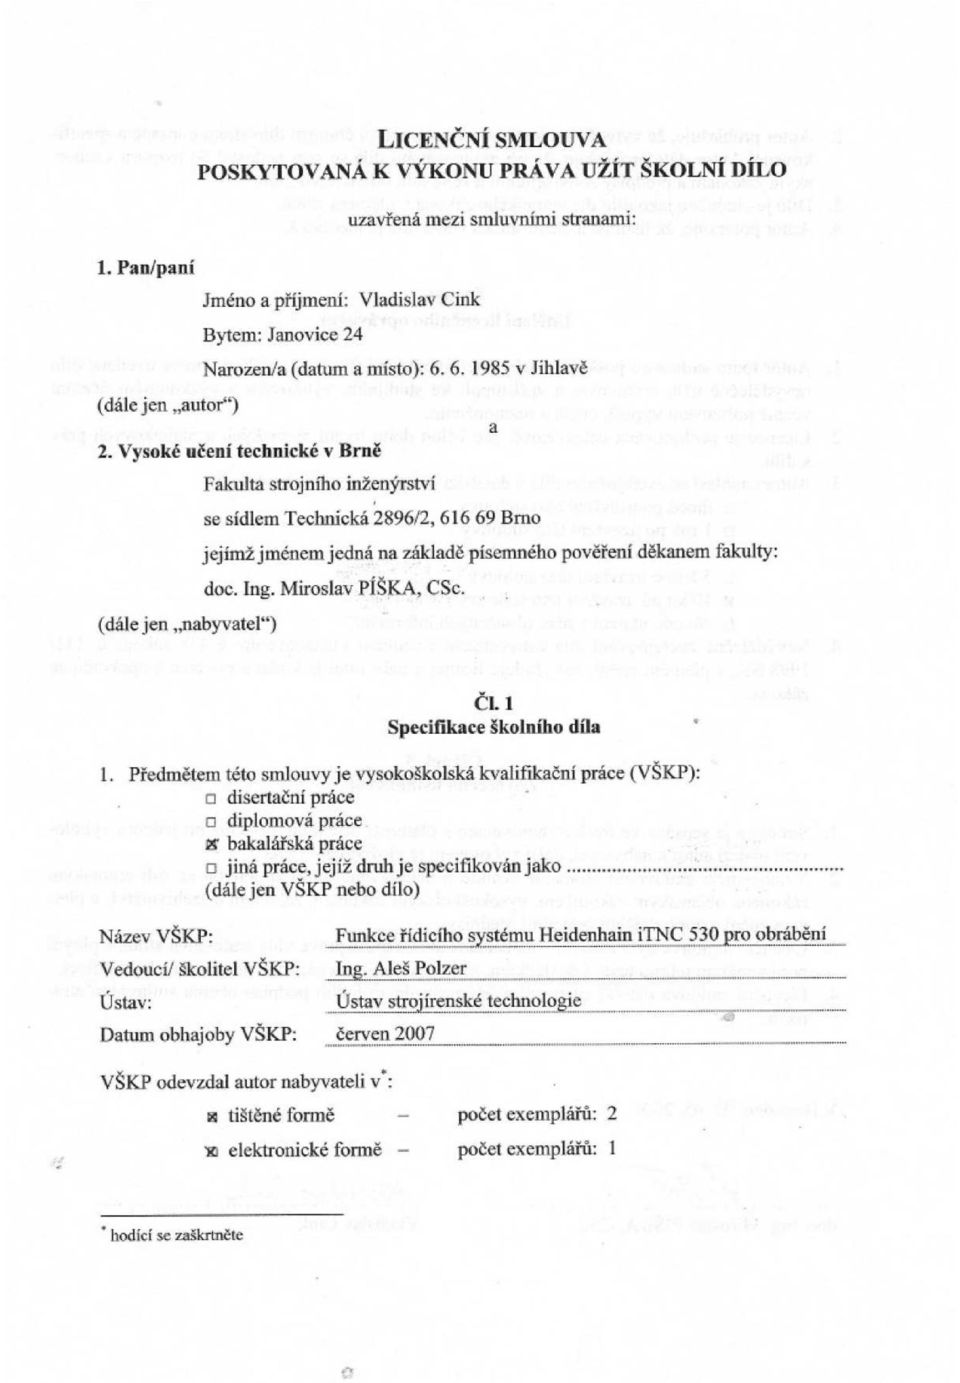 FUNKCE ŘÍDICÍHO SYSTÉMU HEIDENHAIN ITNC 530 PRO OBRÁBĚNÍ THE FUNCTION OF  CONTROL SYSTEM HEIDENHAIN ITNC 530 FOR CUTTING - PDF Free Download